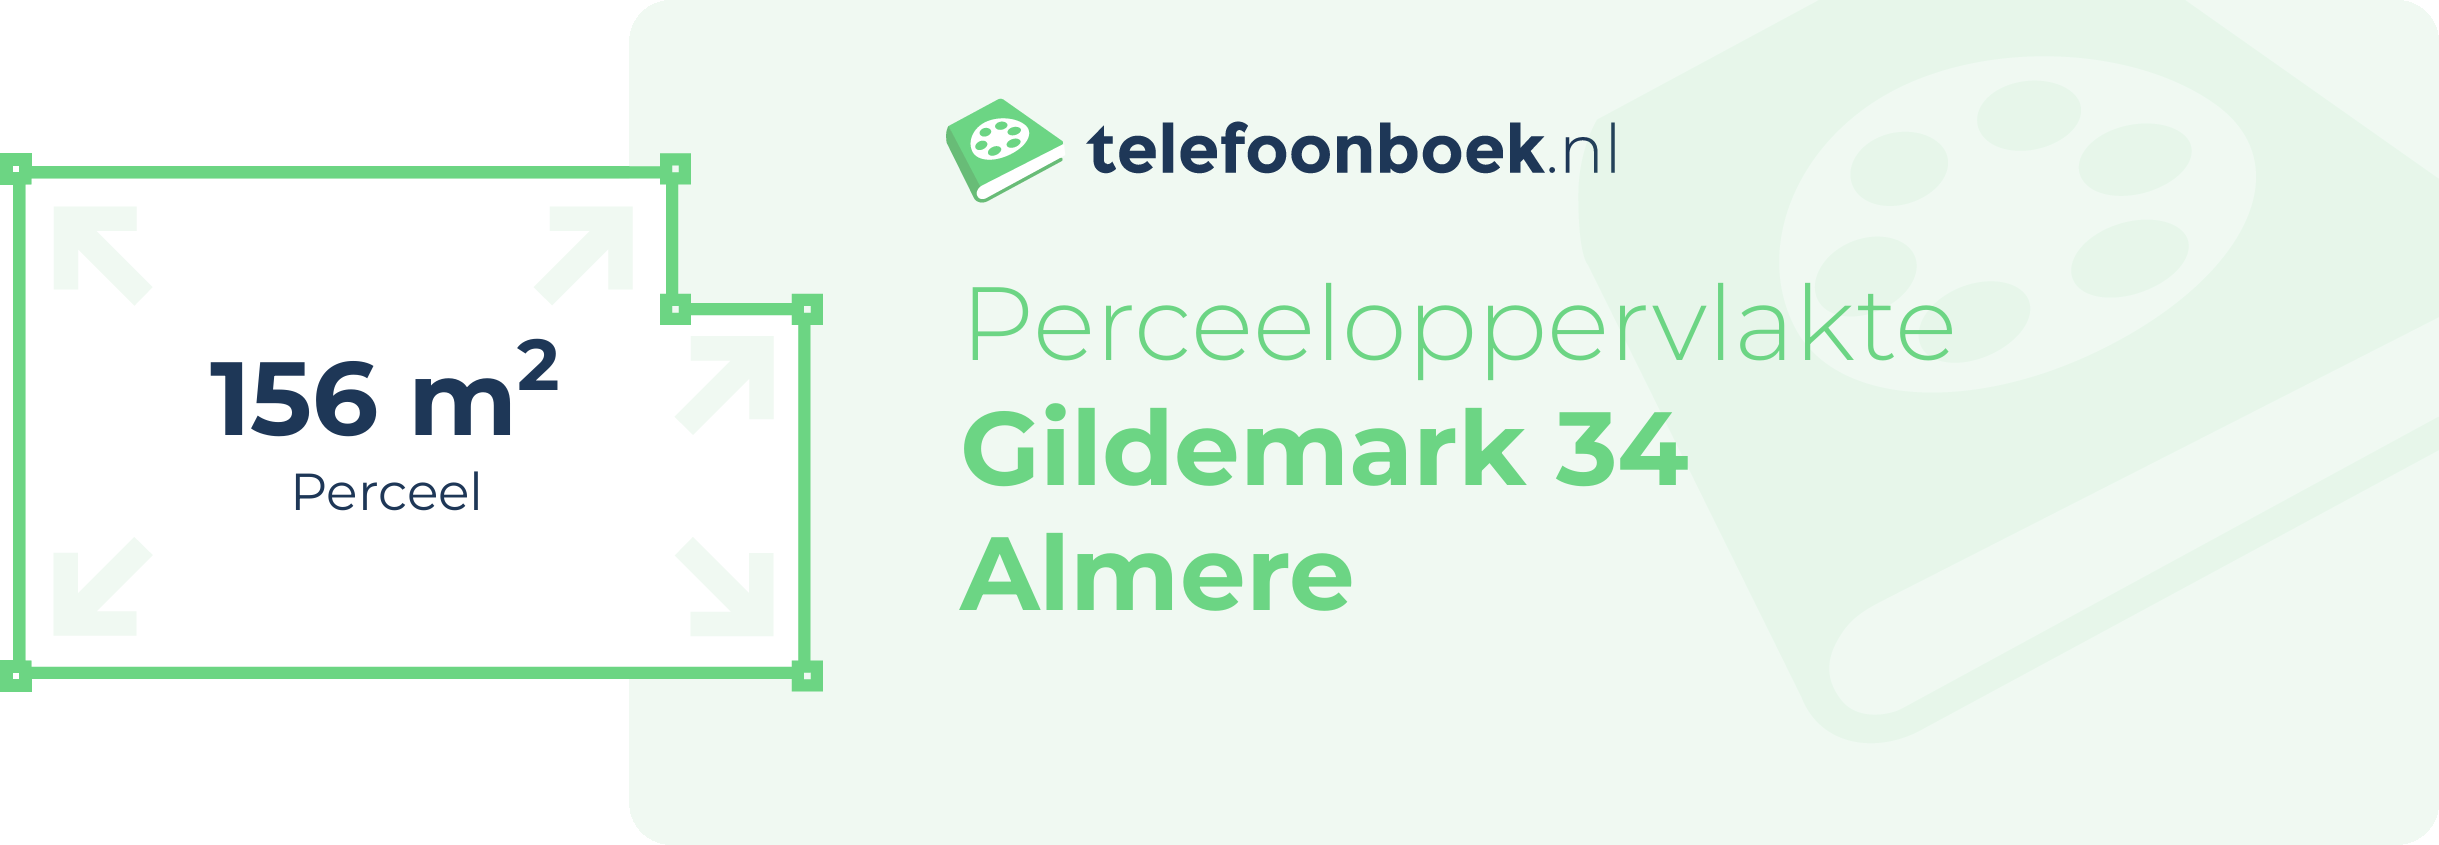 Perceeloppervlakte Gildemark 34 Almere